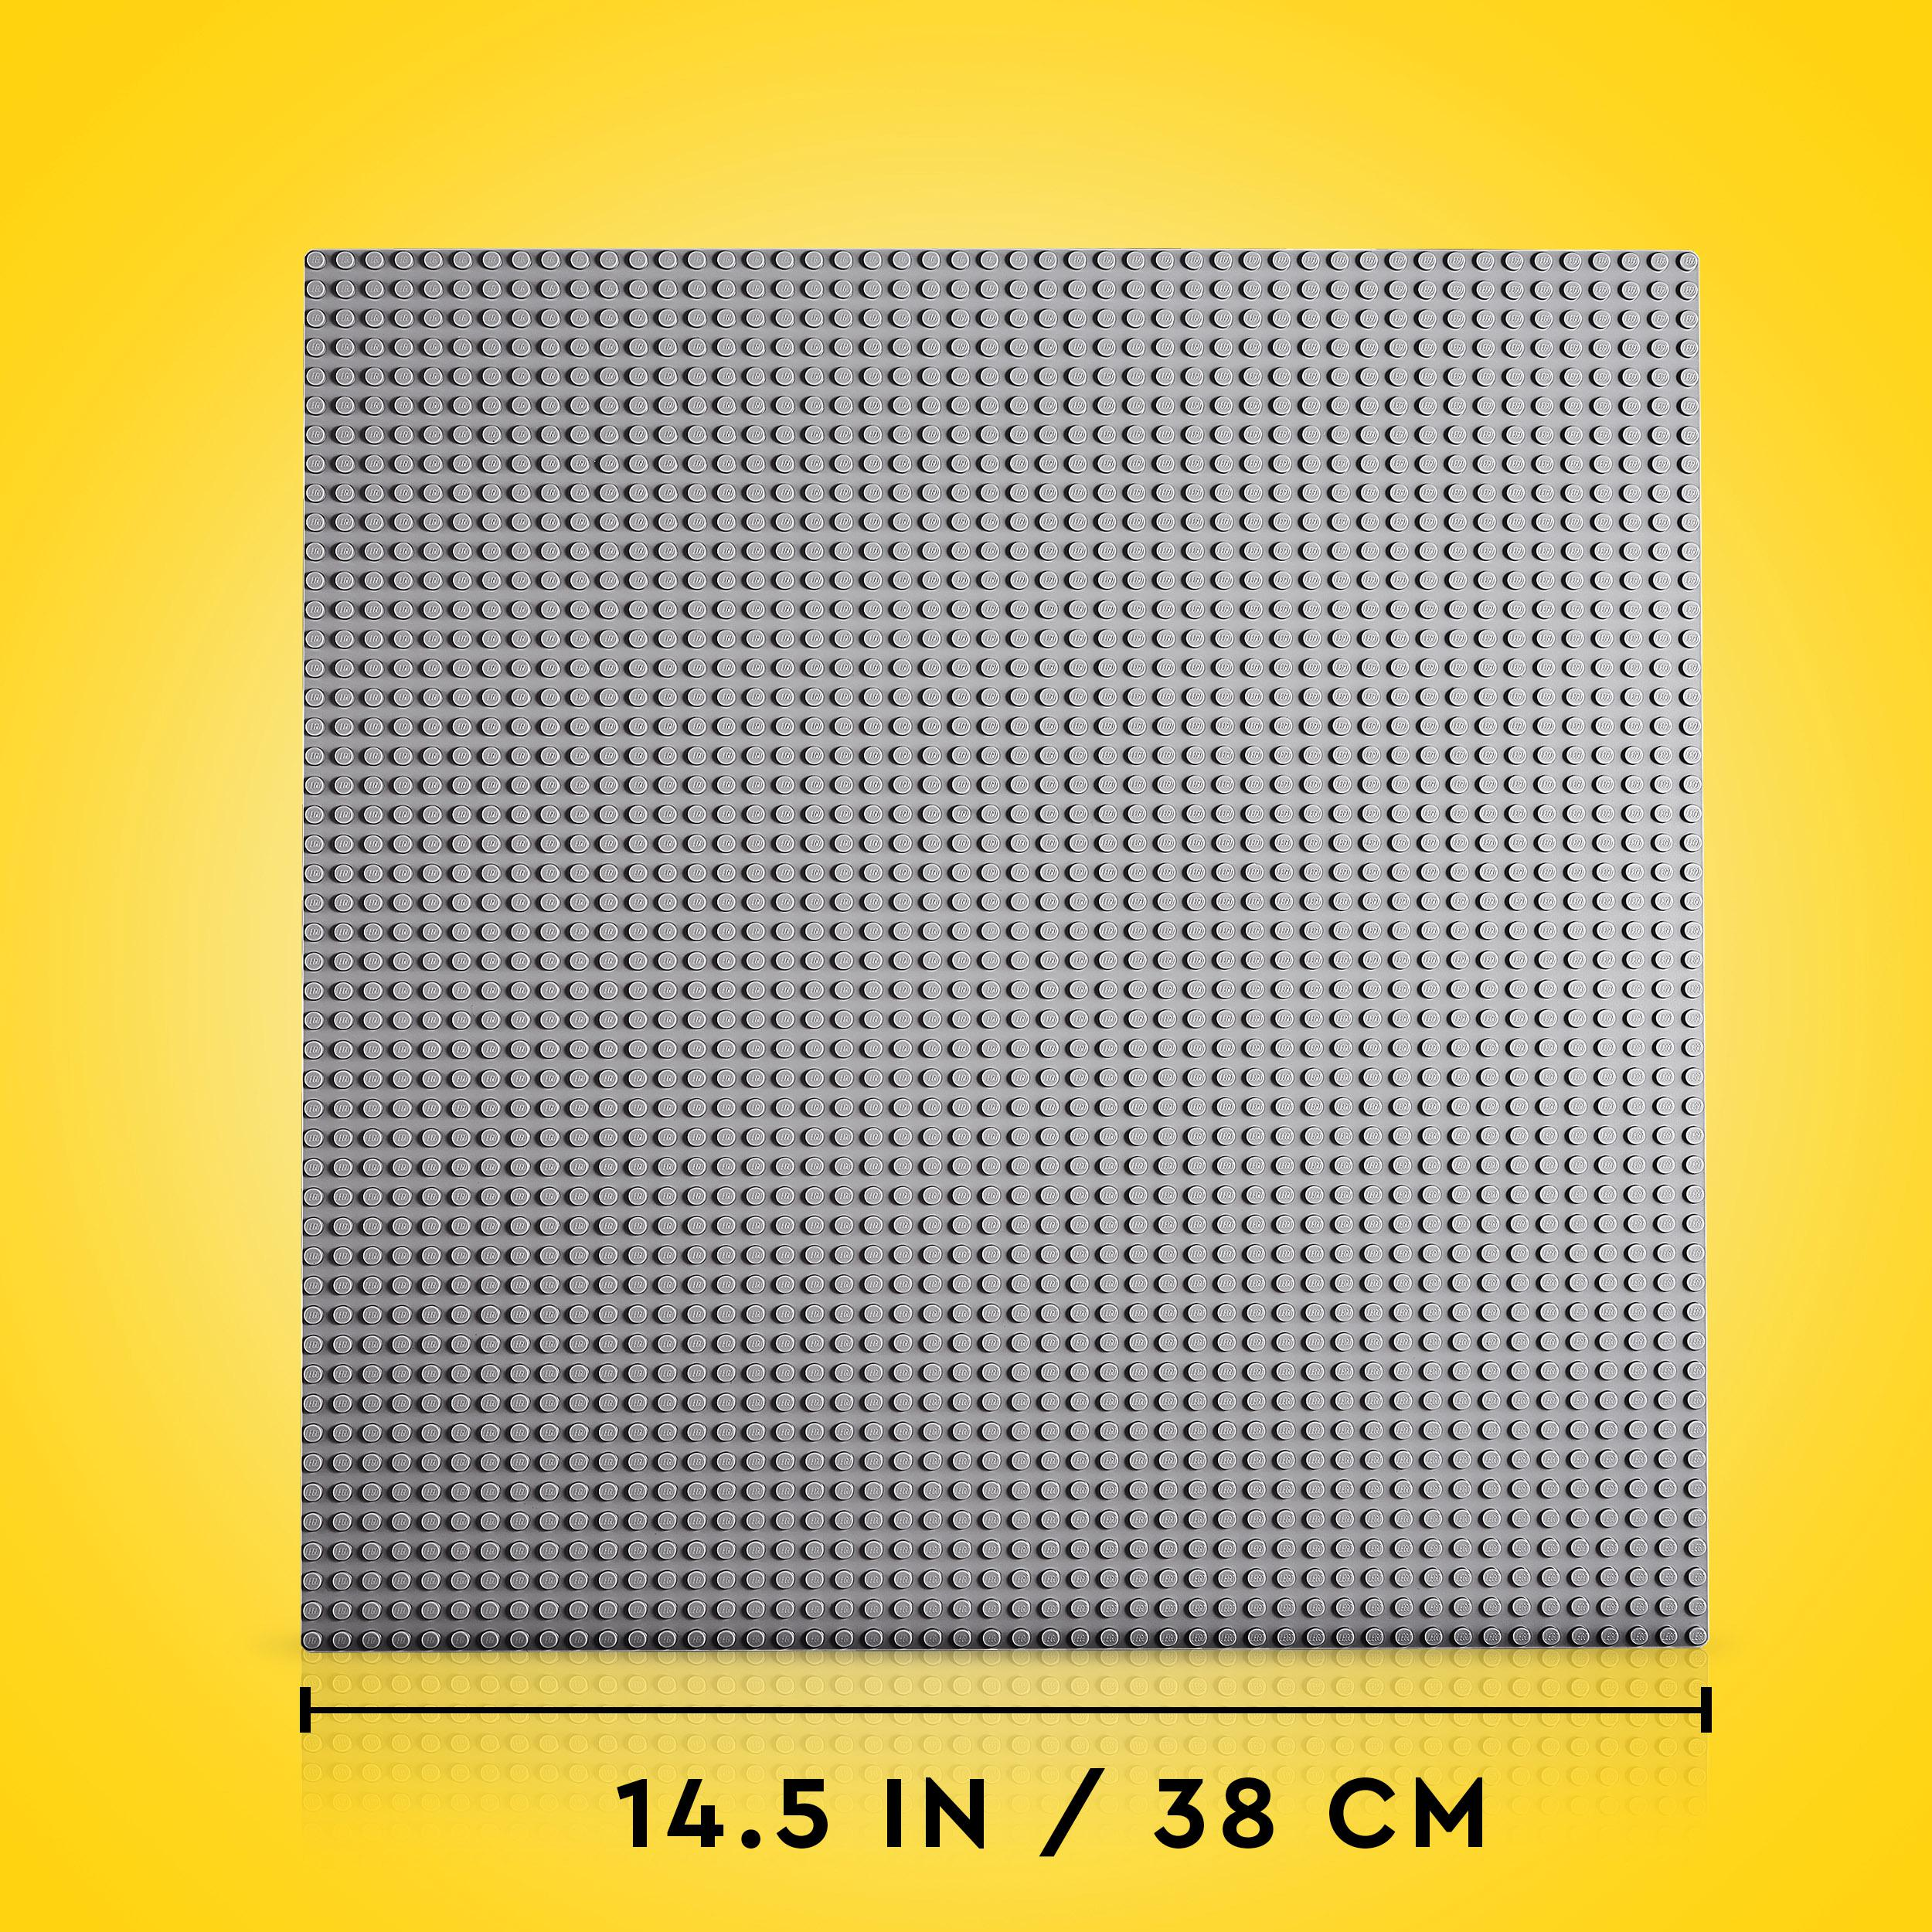 Graue Classic Grau LEGO Bauplatte Bausatz, 11024